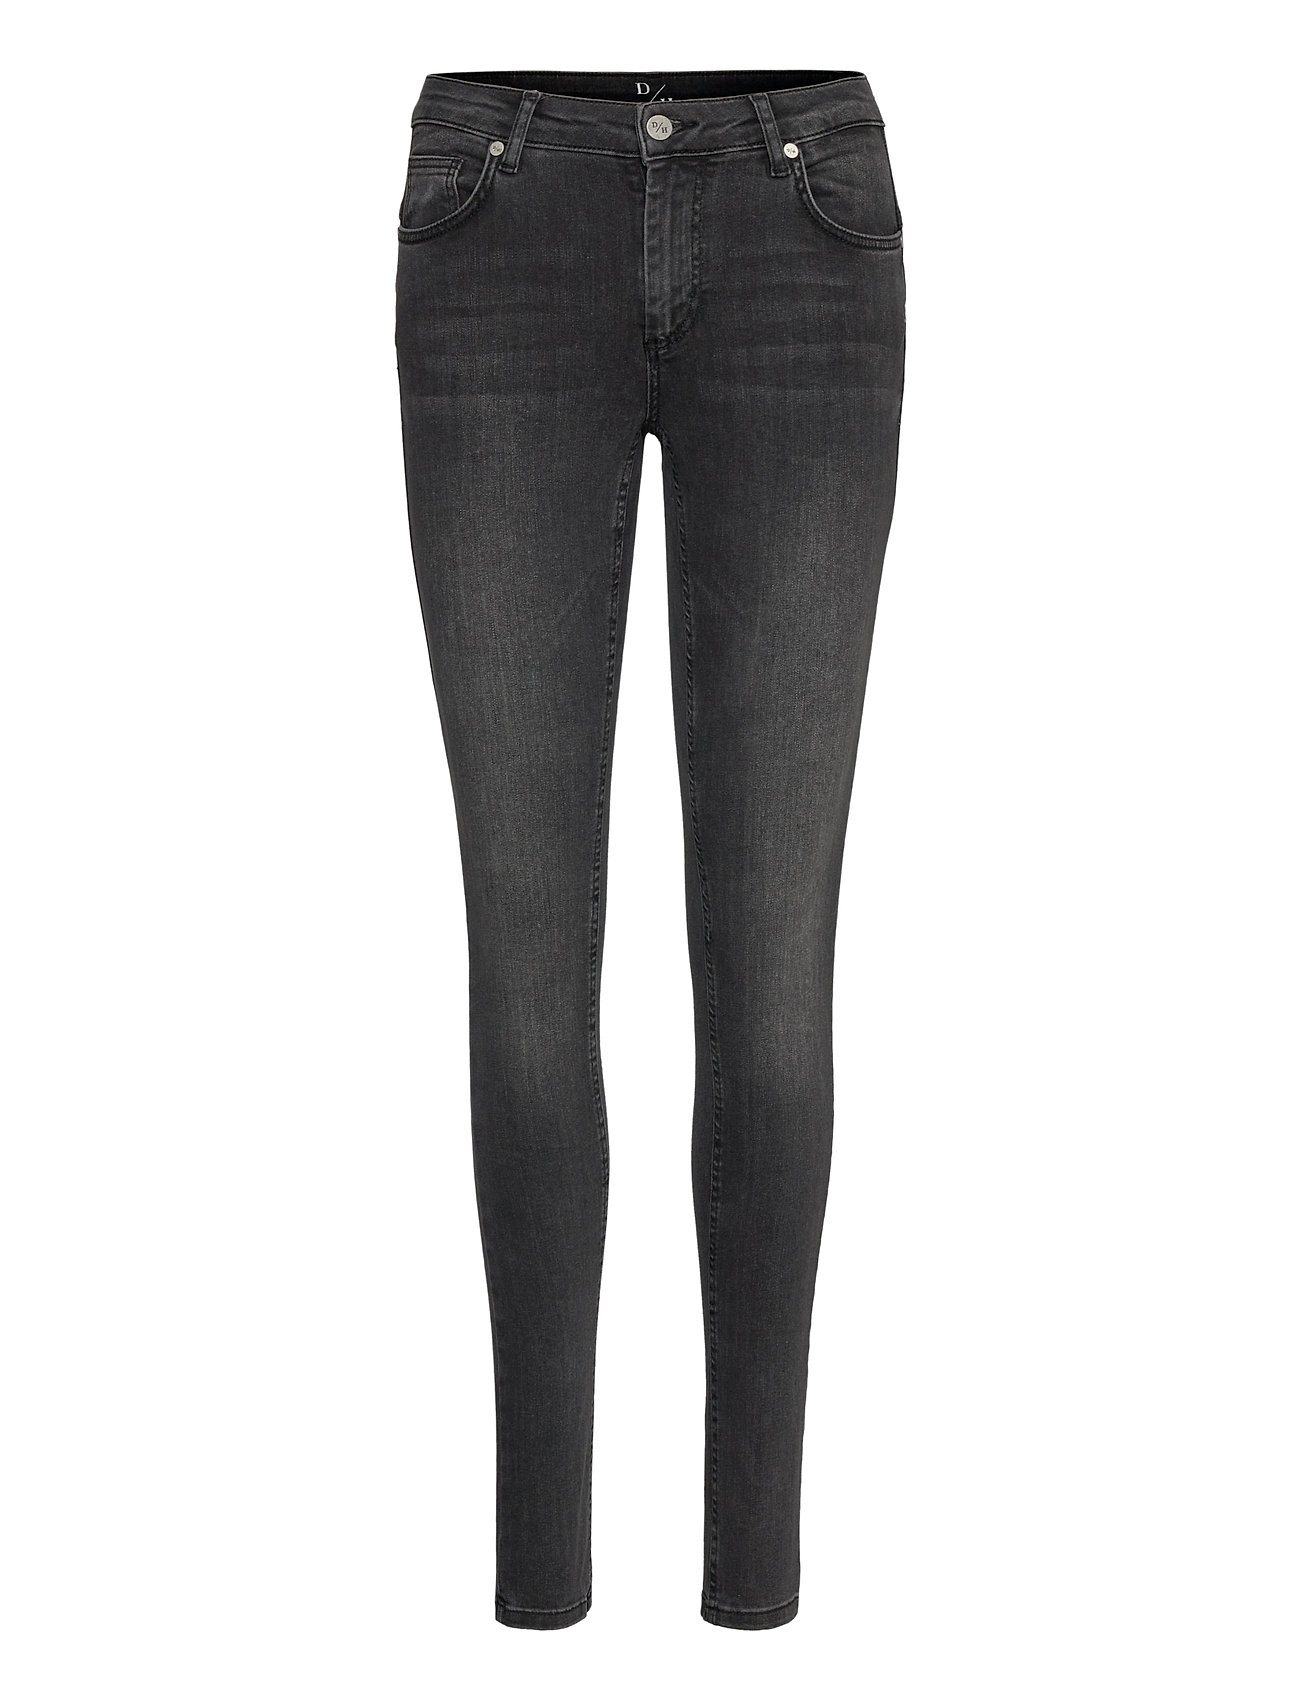 halt Rubin Inficere Denim Hunter 32 The Celina Long Custom - Slim jeans - Boozt.com